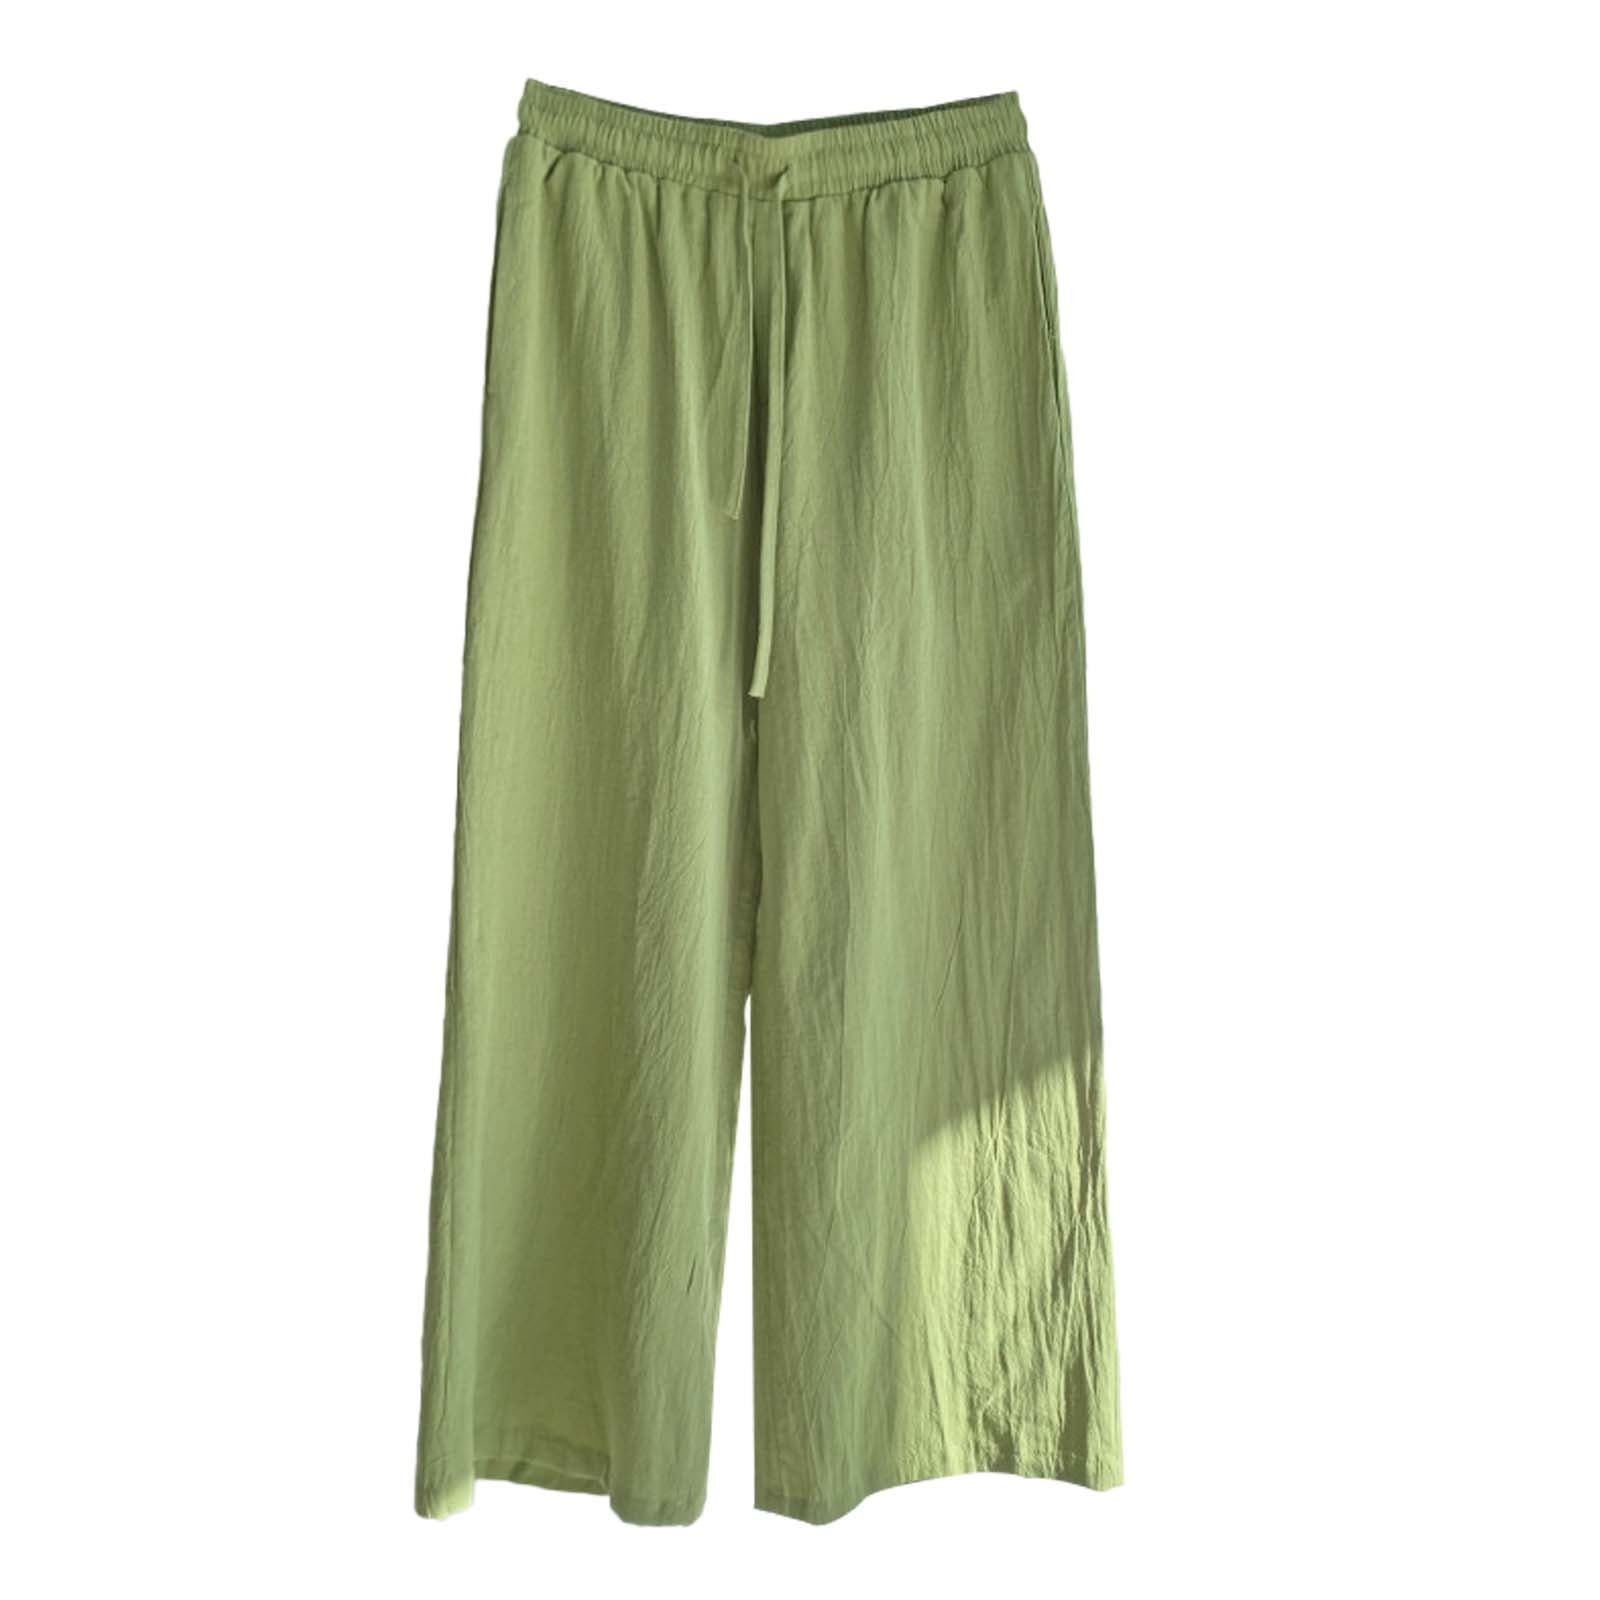 VEKDONE Summer Plus Size Wide Leg Pants for Women Cotton Linen Palazzo ...